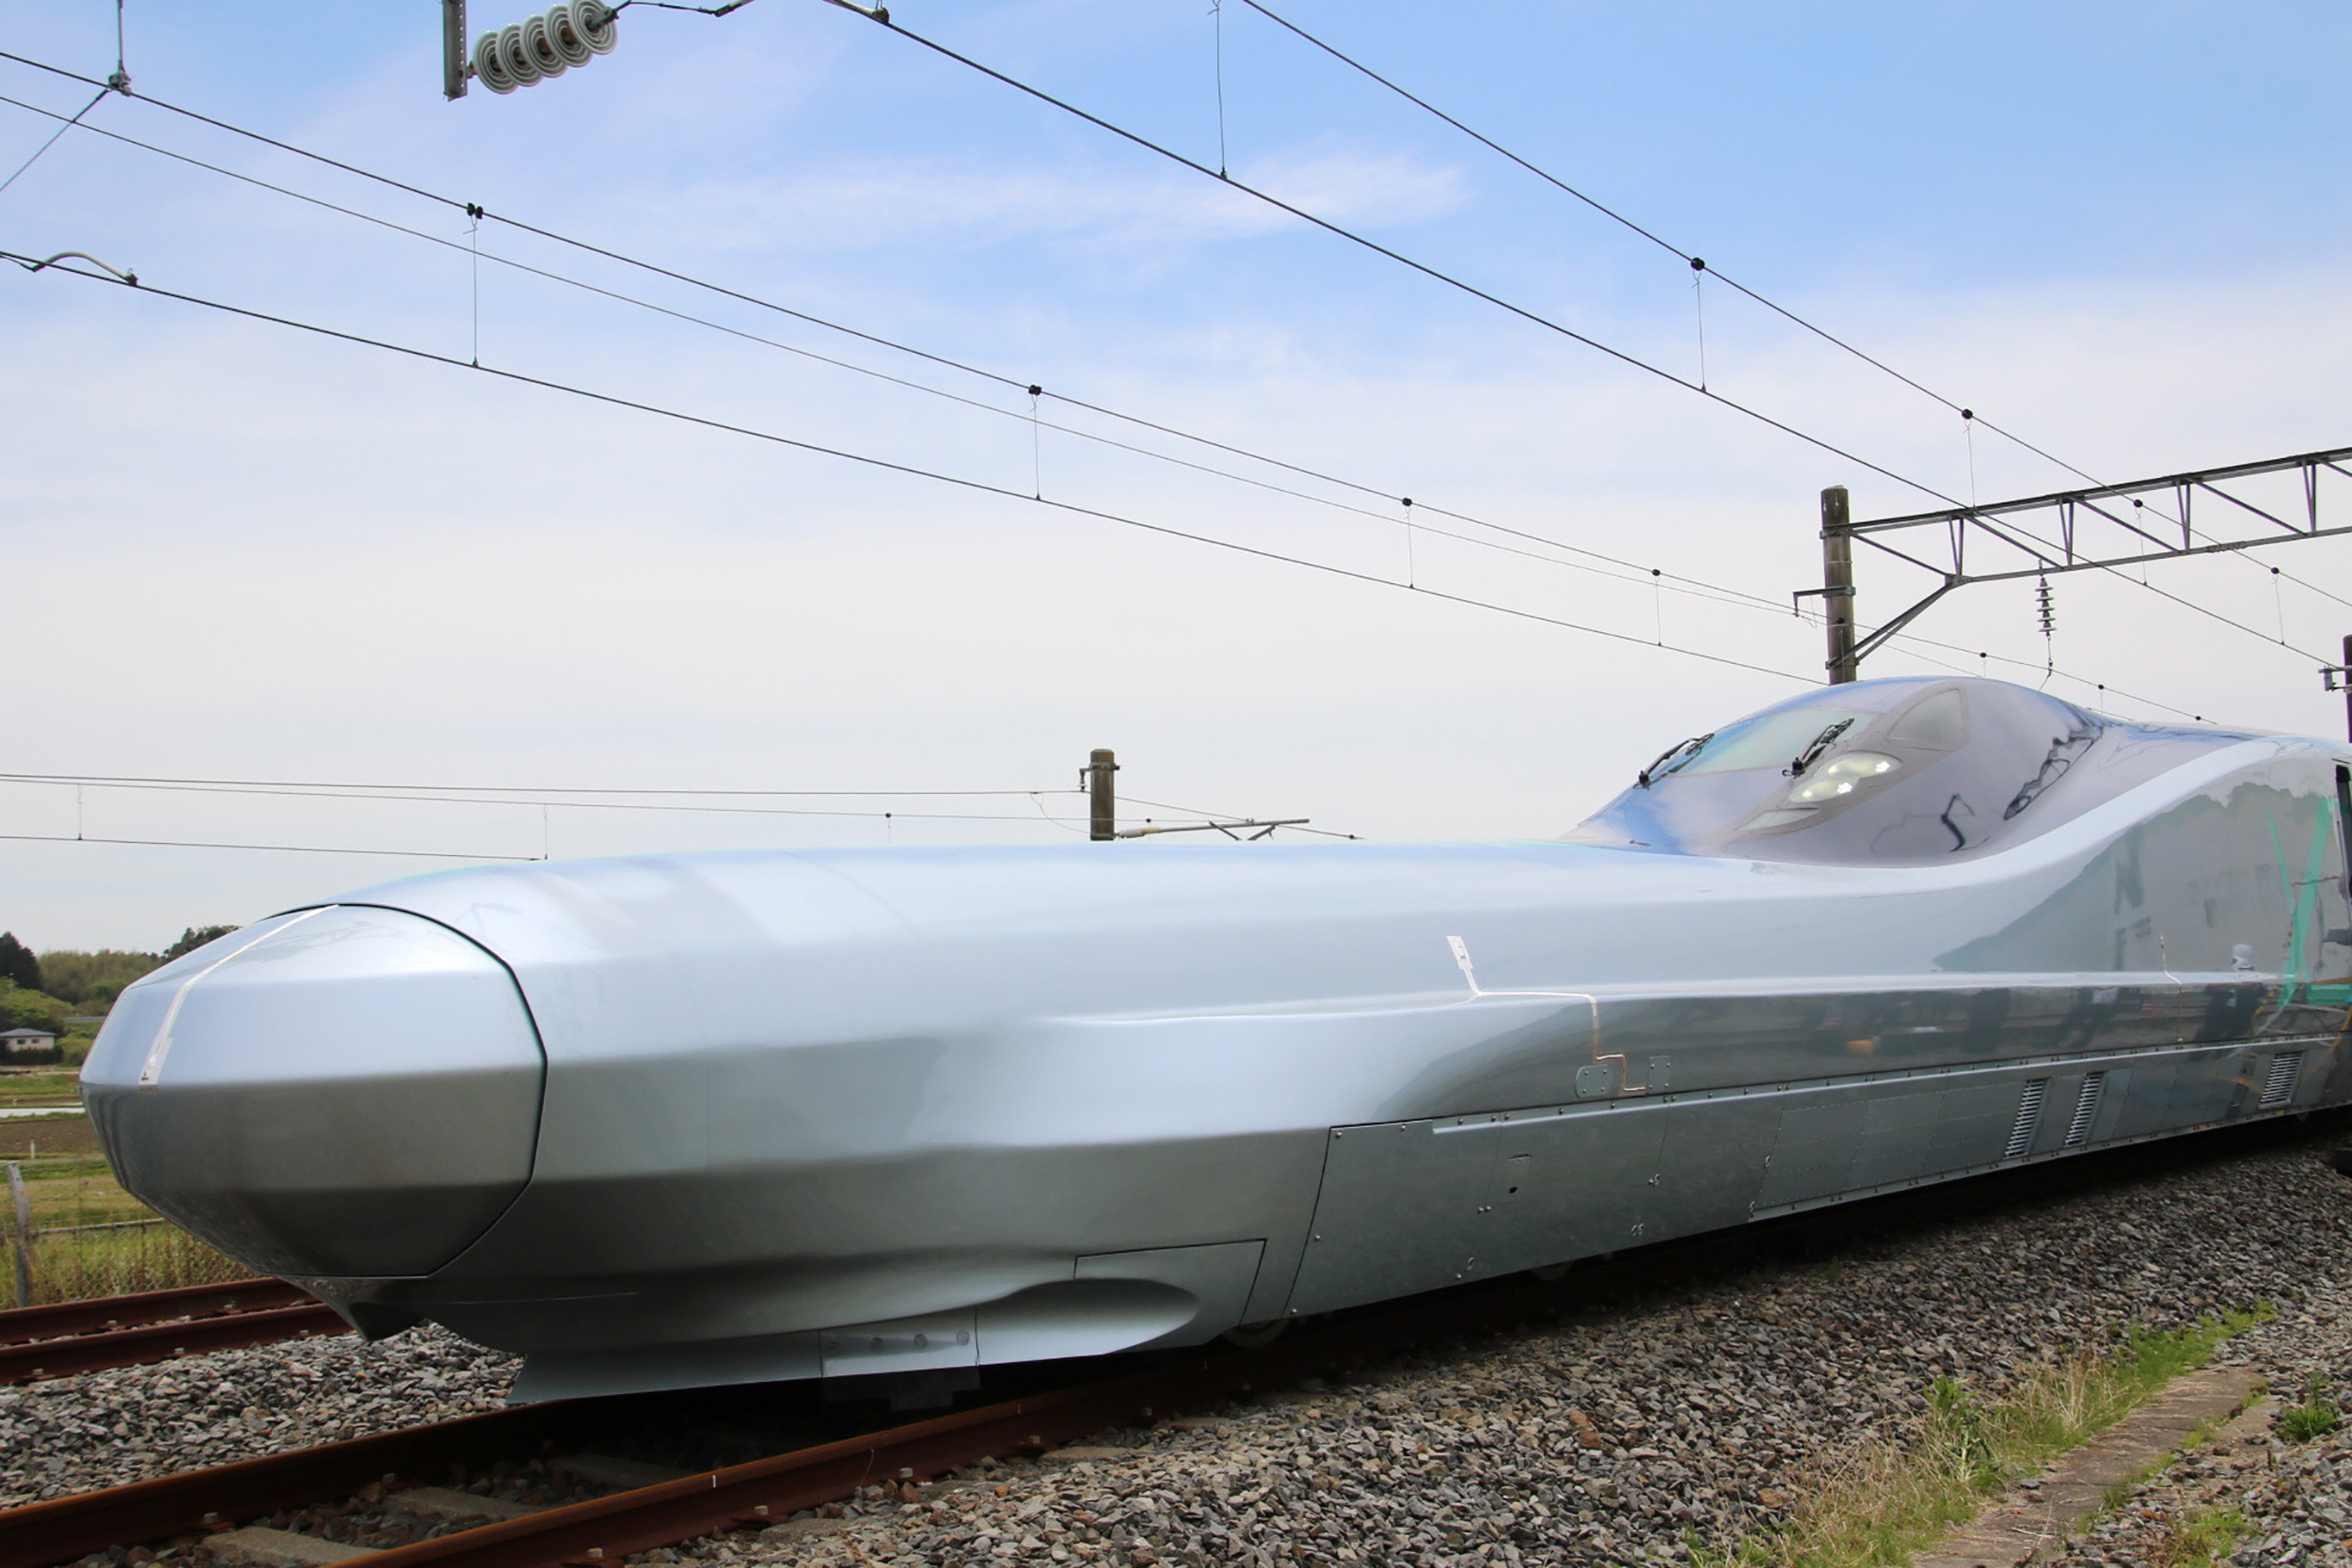 Japanese Railway Company Starts Testing 249mph Bullet Train Speeds Ars Technica